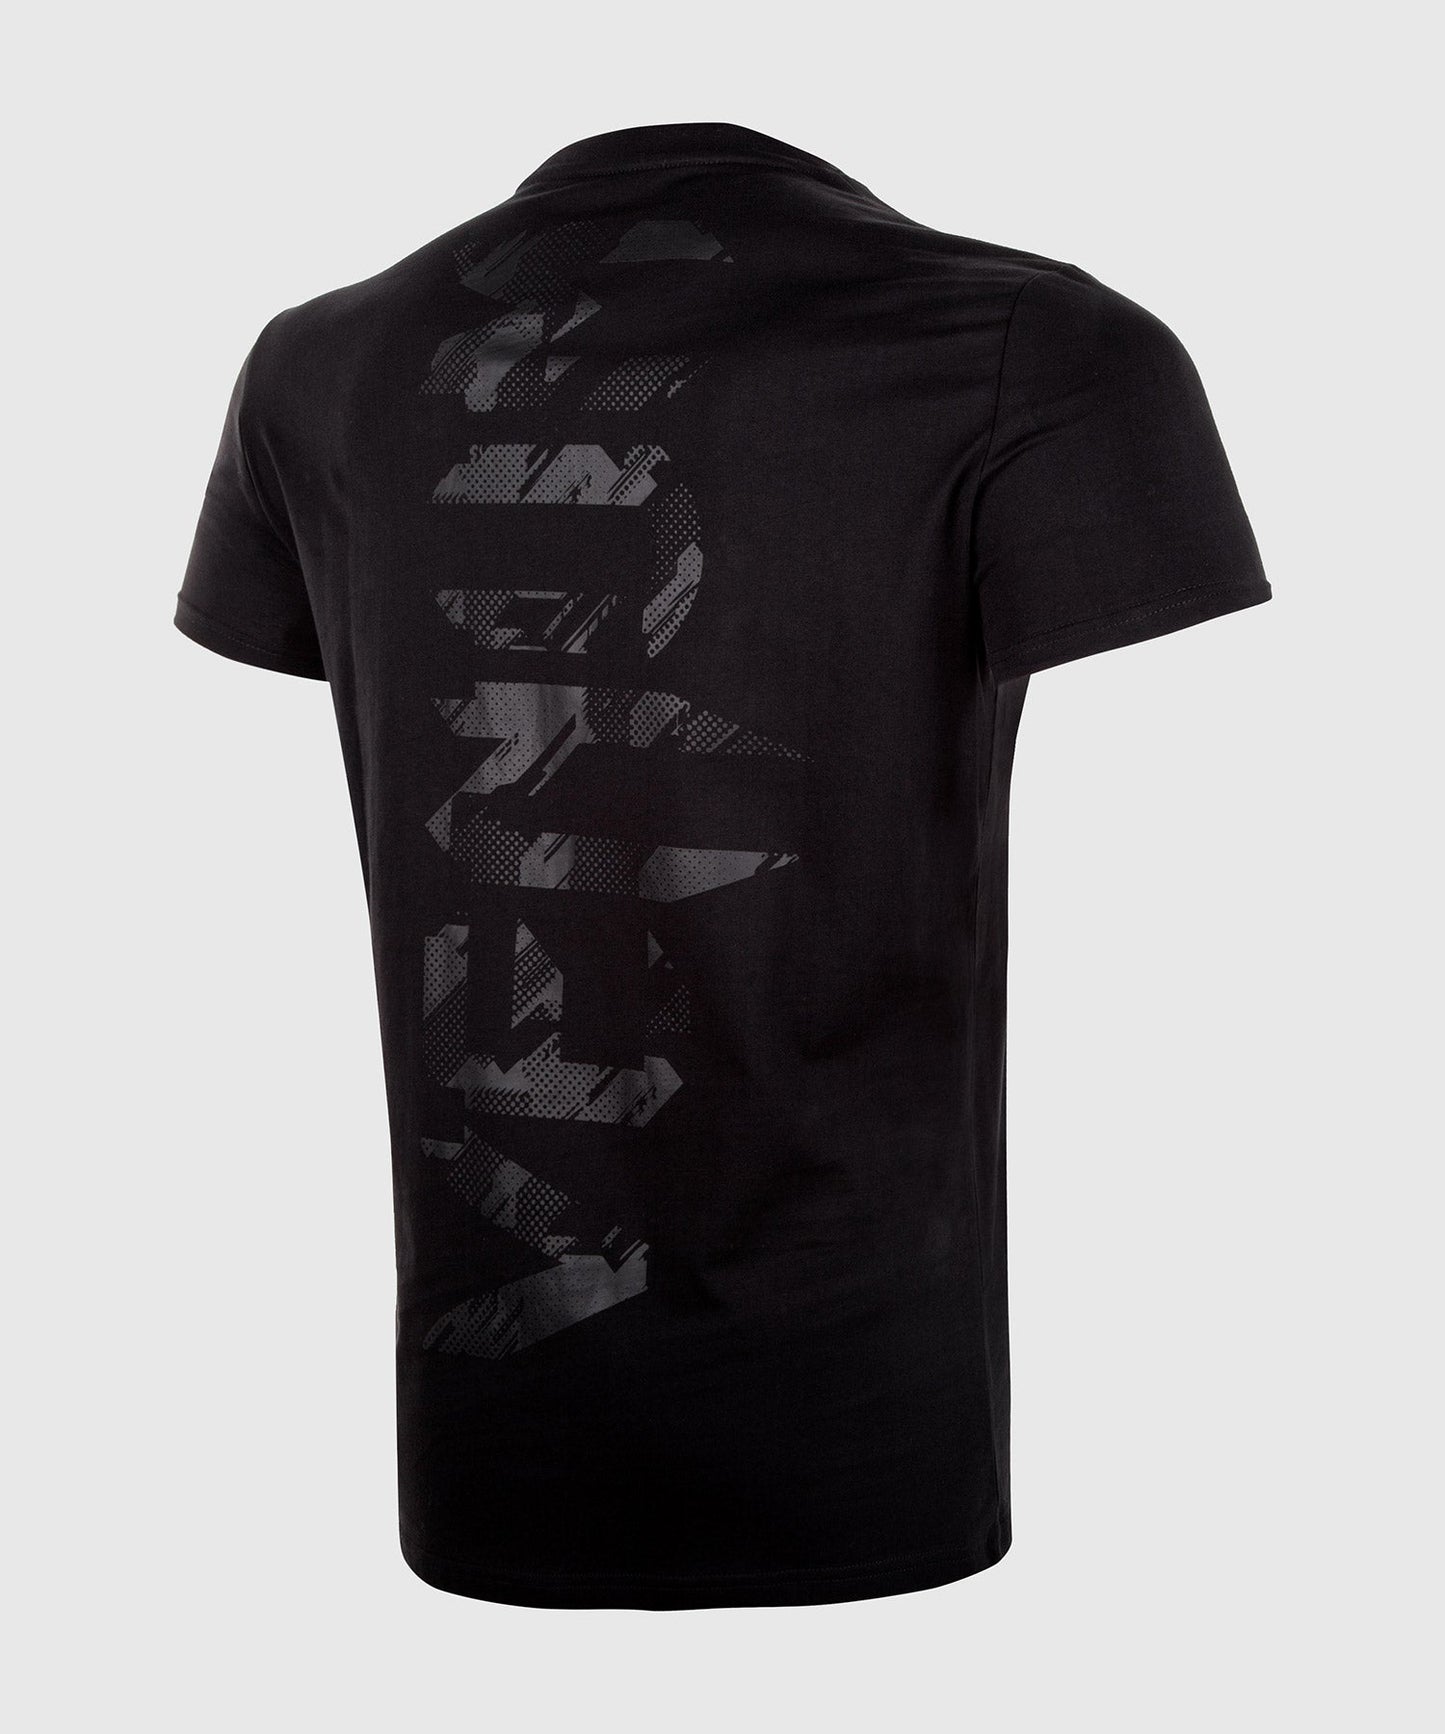 Venum Tecmo Giant T-shirt - Black/Black